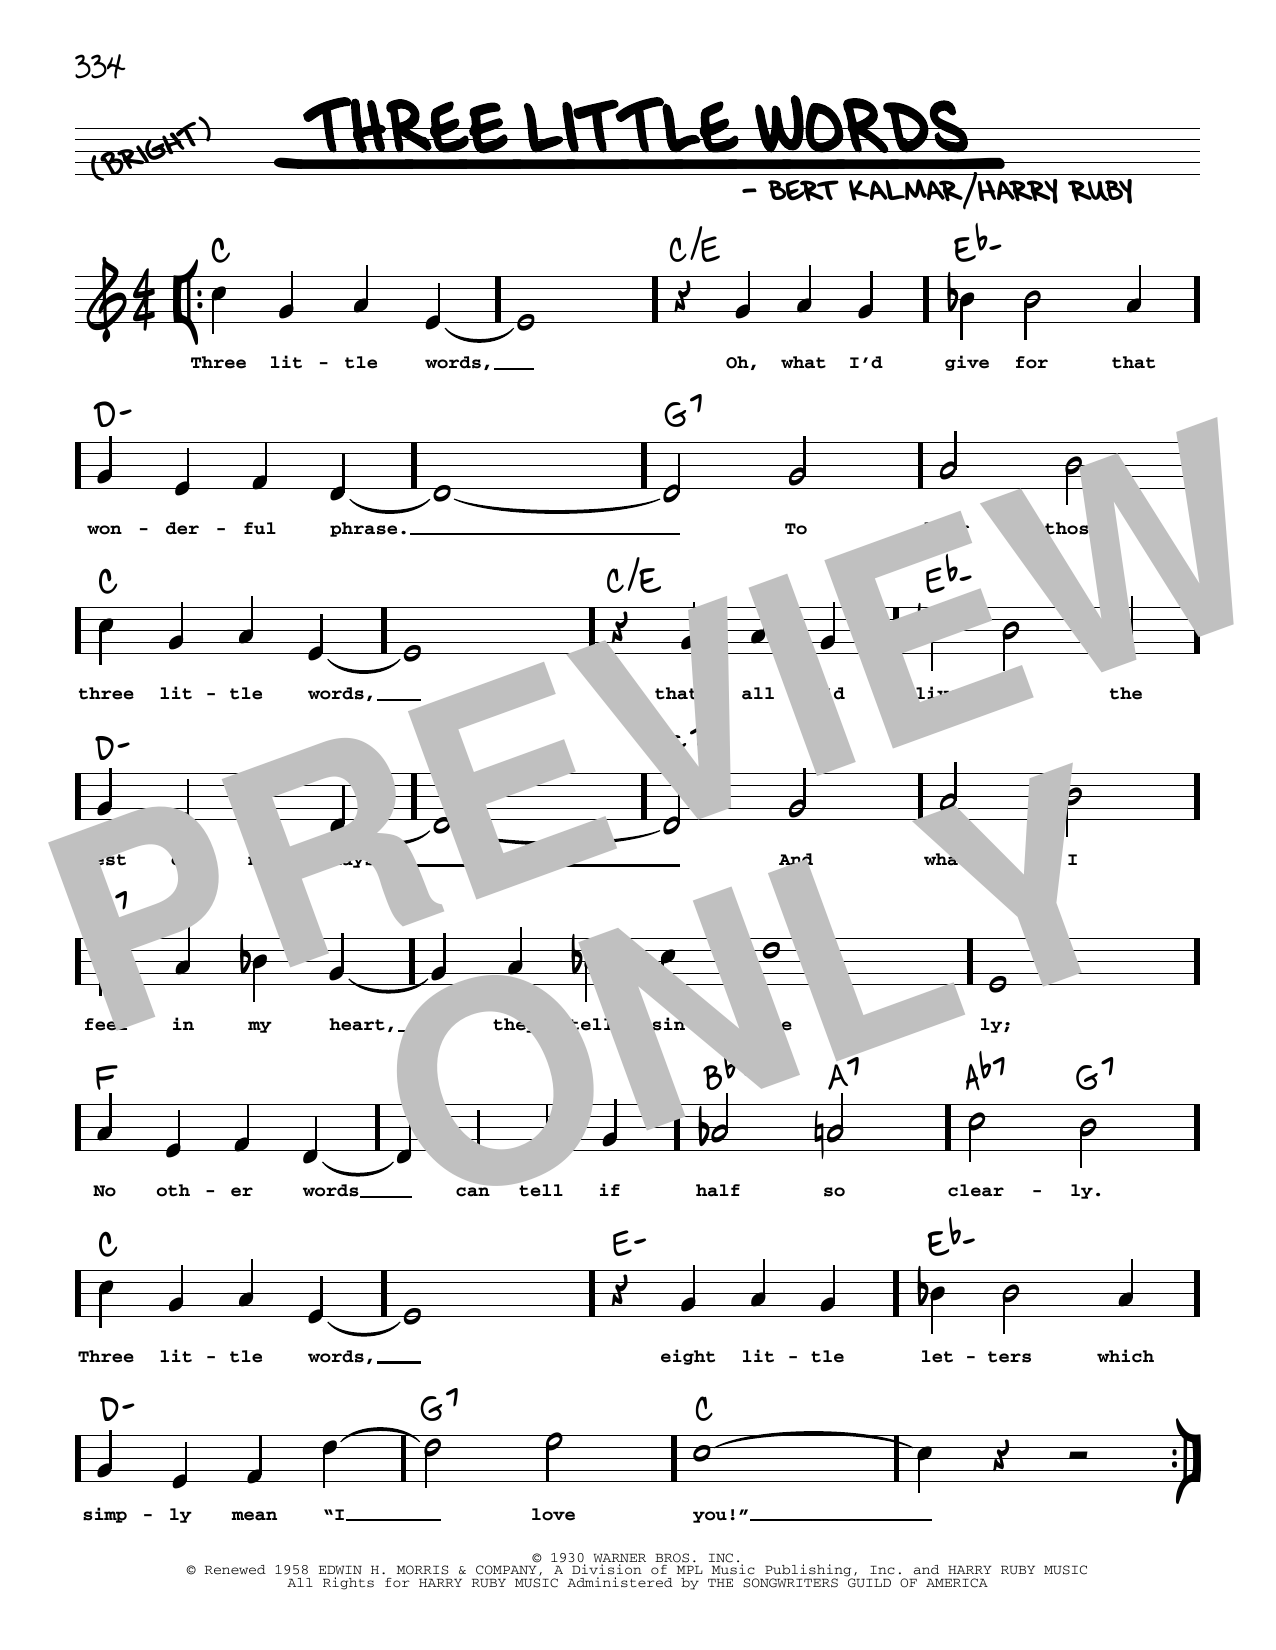 Bert Kalmar Three Little Words (arr. Robert Rawlins) Sheet Music Notes & Chords for Real Book – Melody, Lyrics & Chords - Download or Print PDF